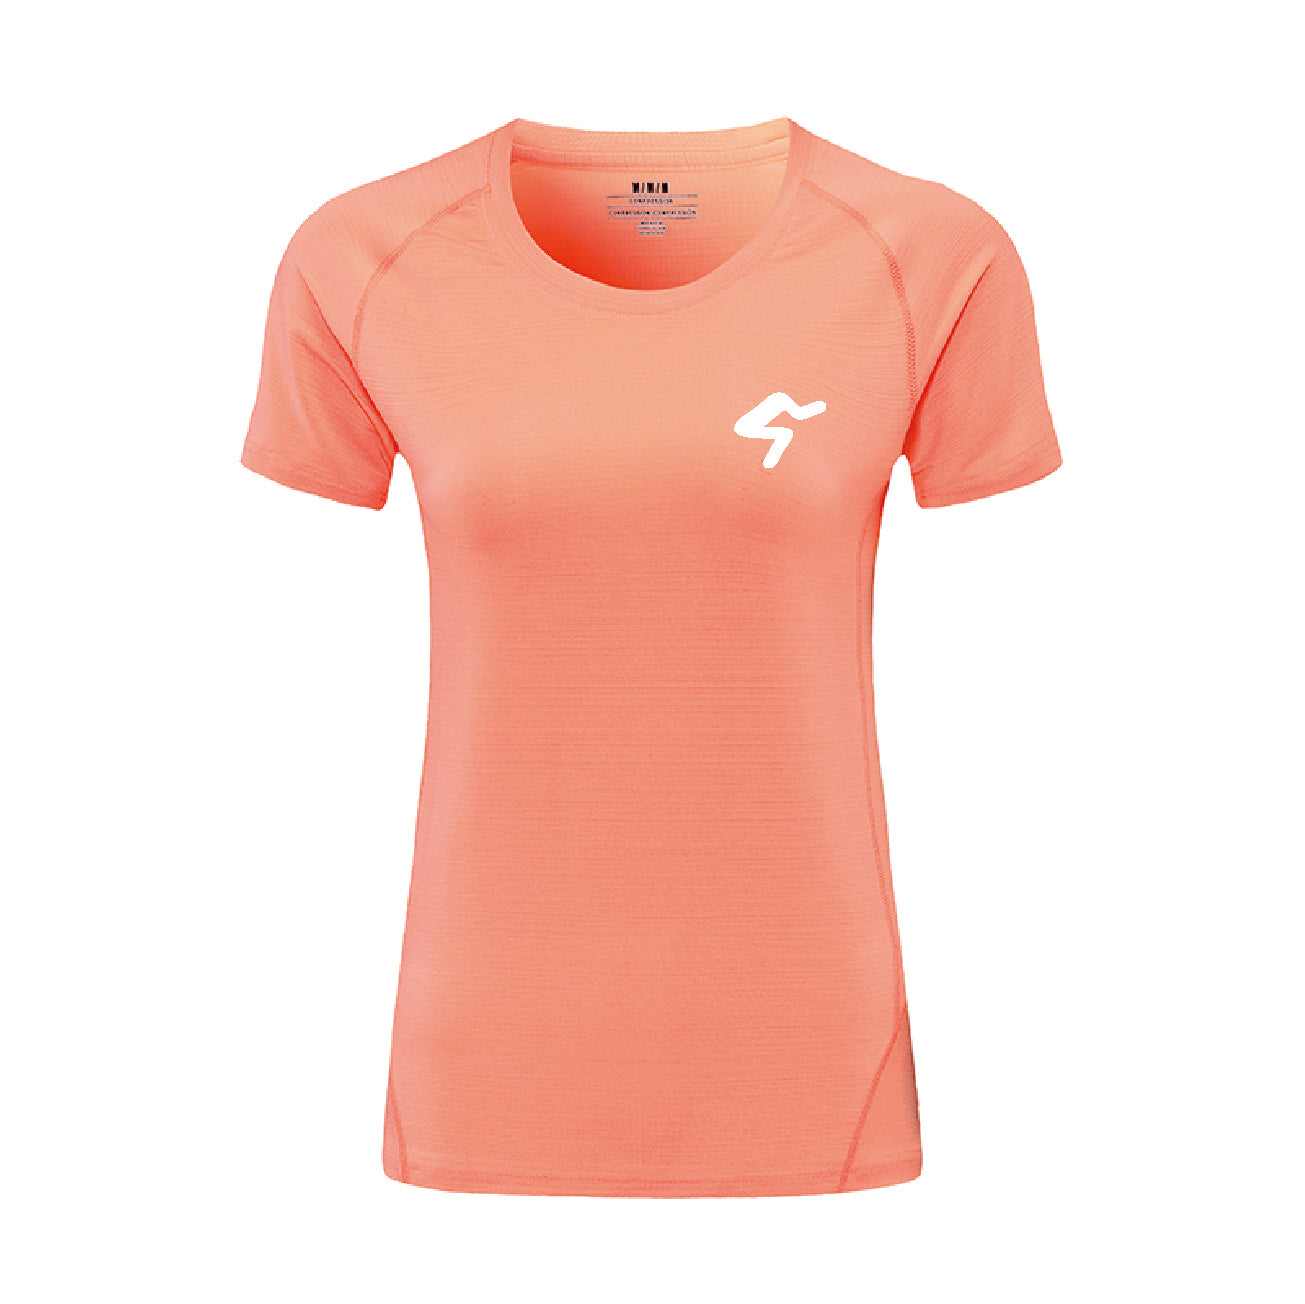 The Gymbum UK Squat QuickDry Women's Performance Sport T-Shirt